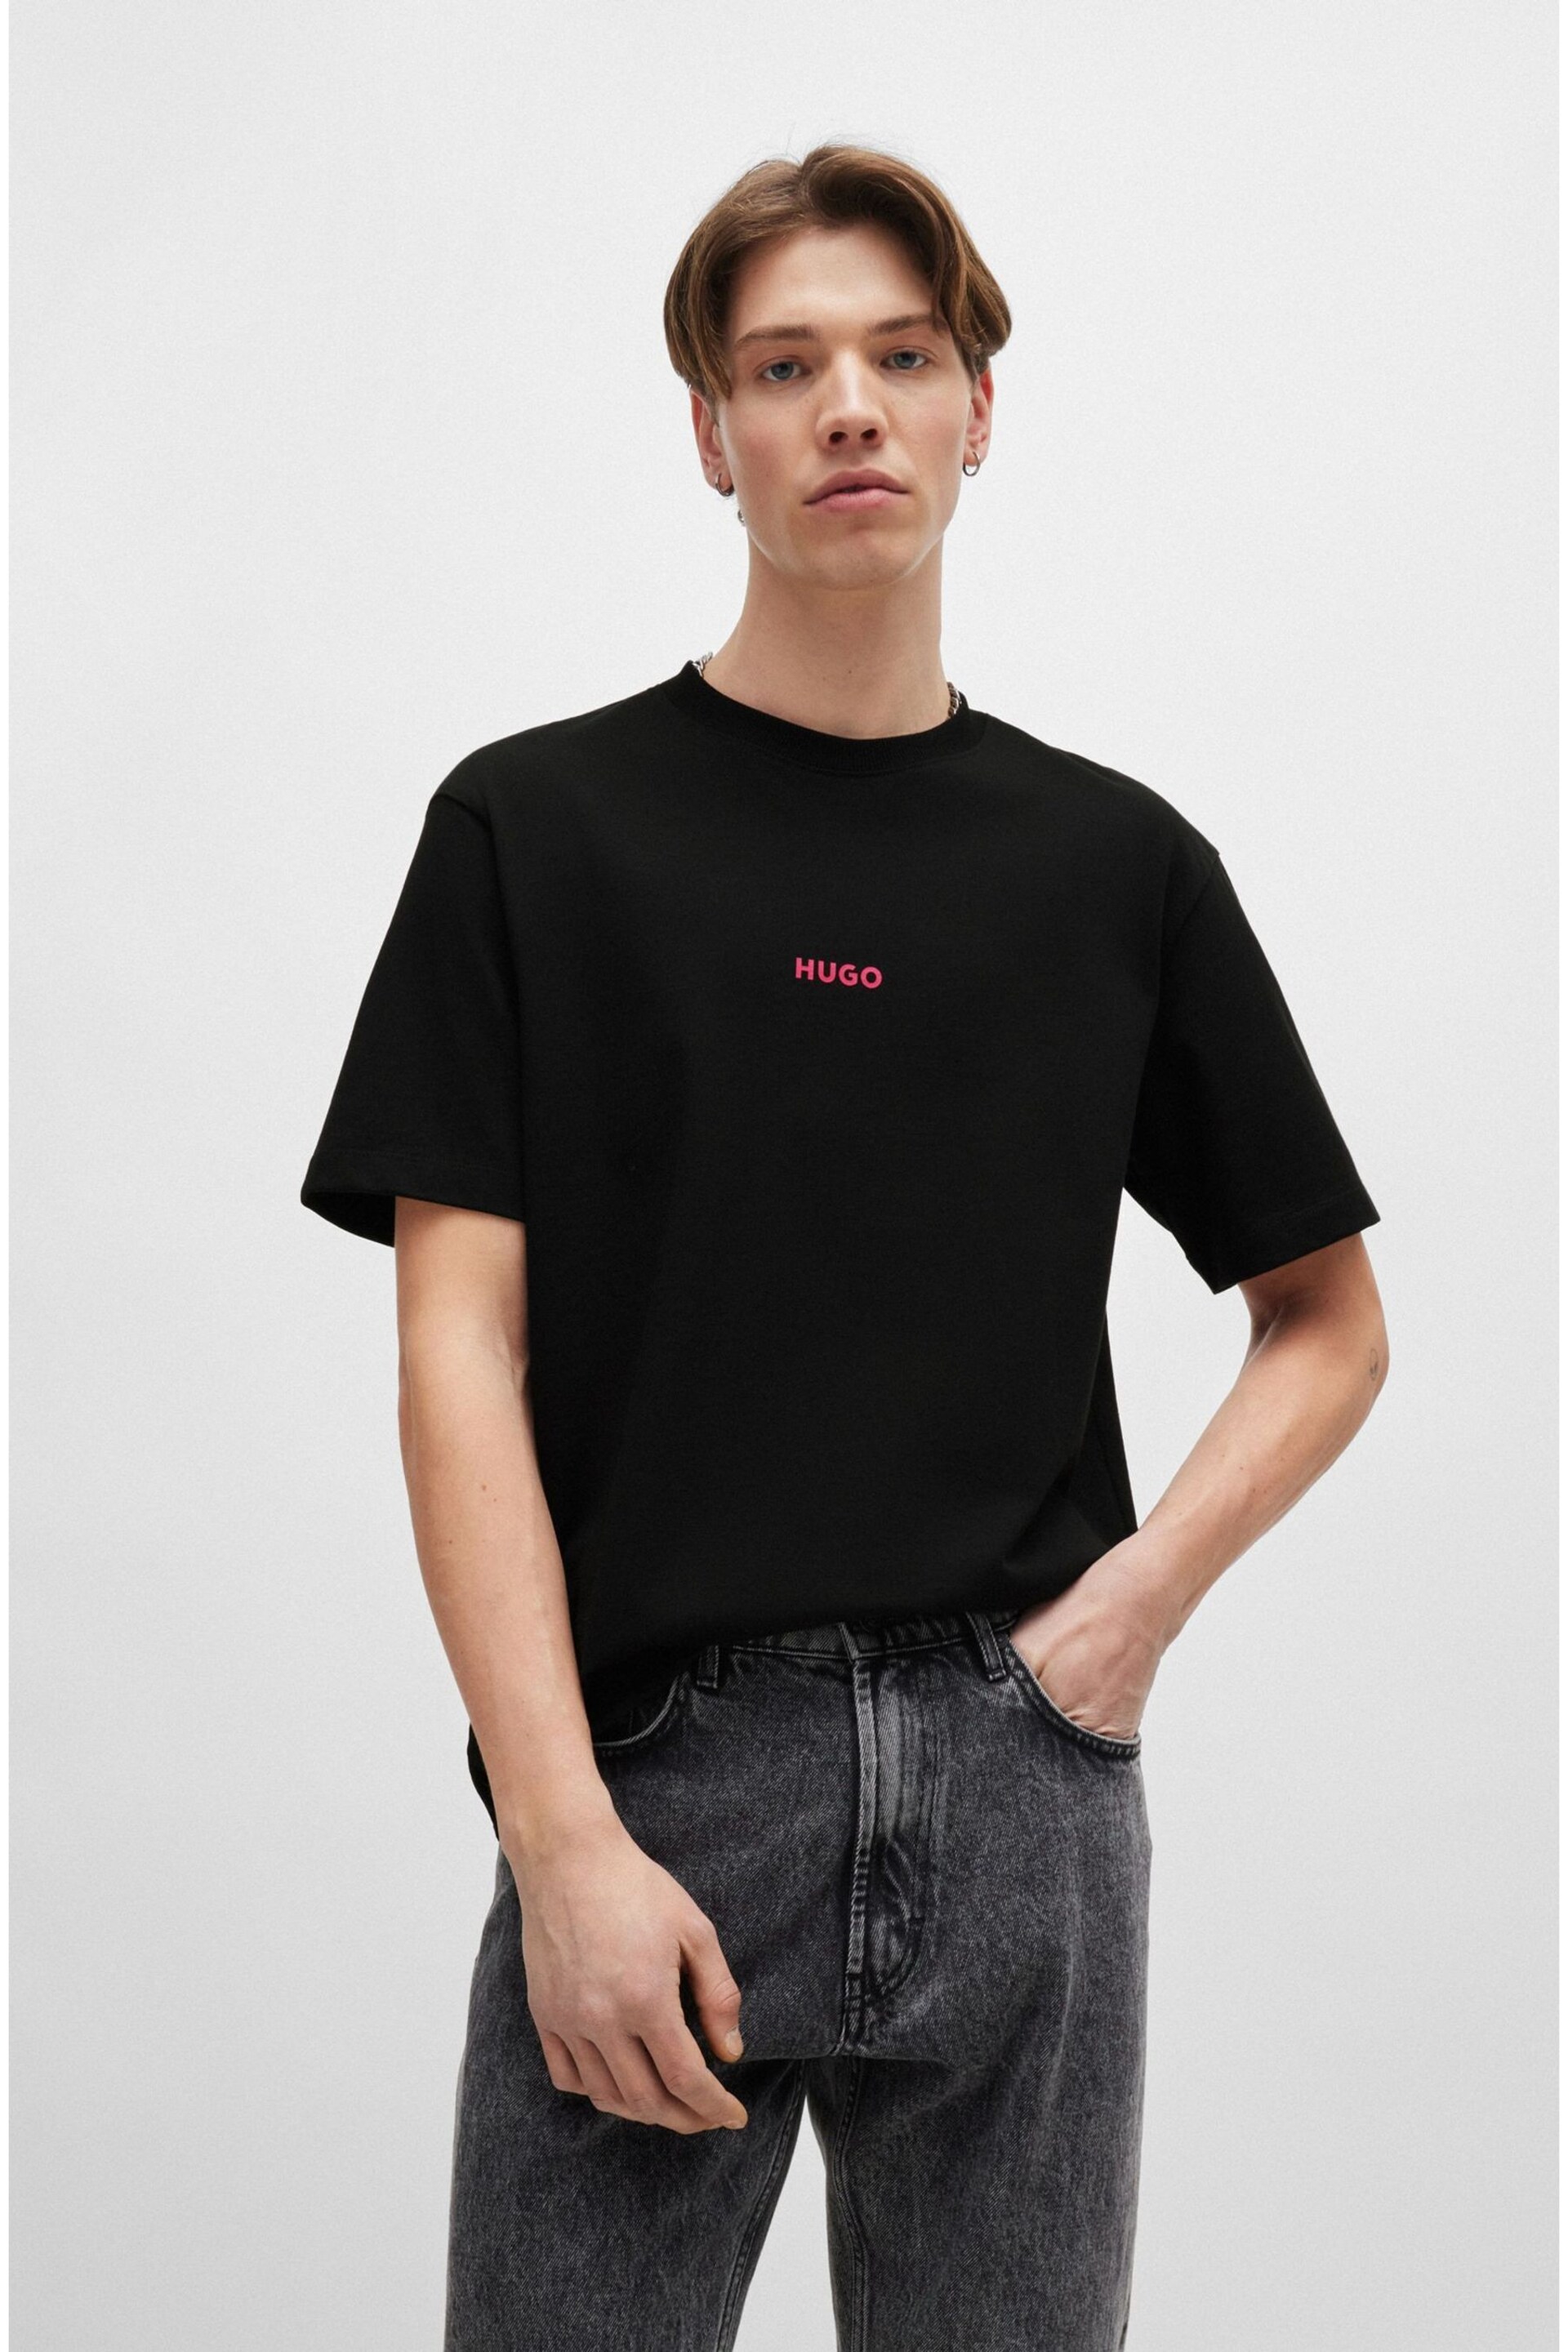 HUGO Black Cotton Jersey T-Shirt With Back Artwork Print - Image 1 of 5